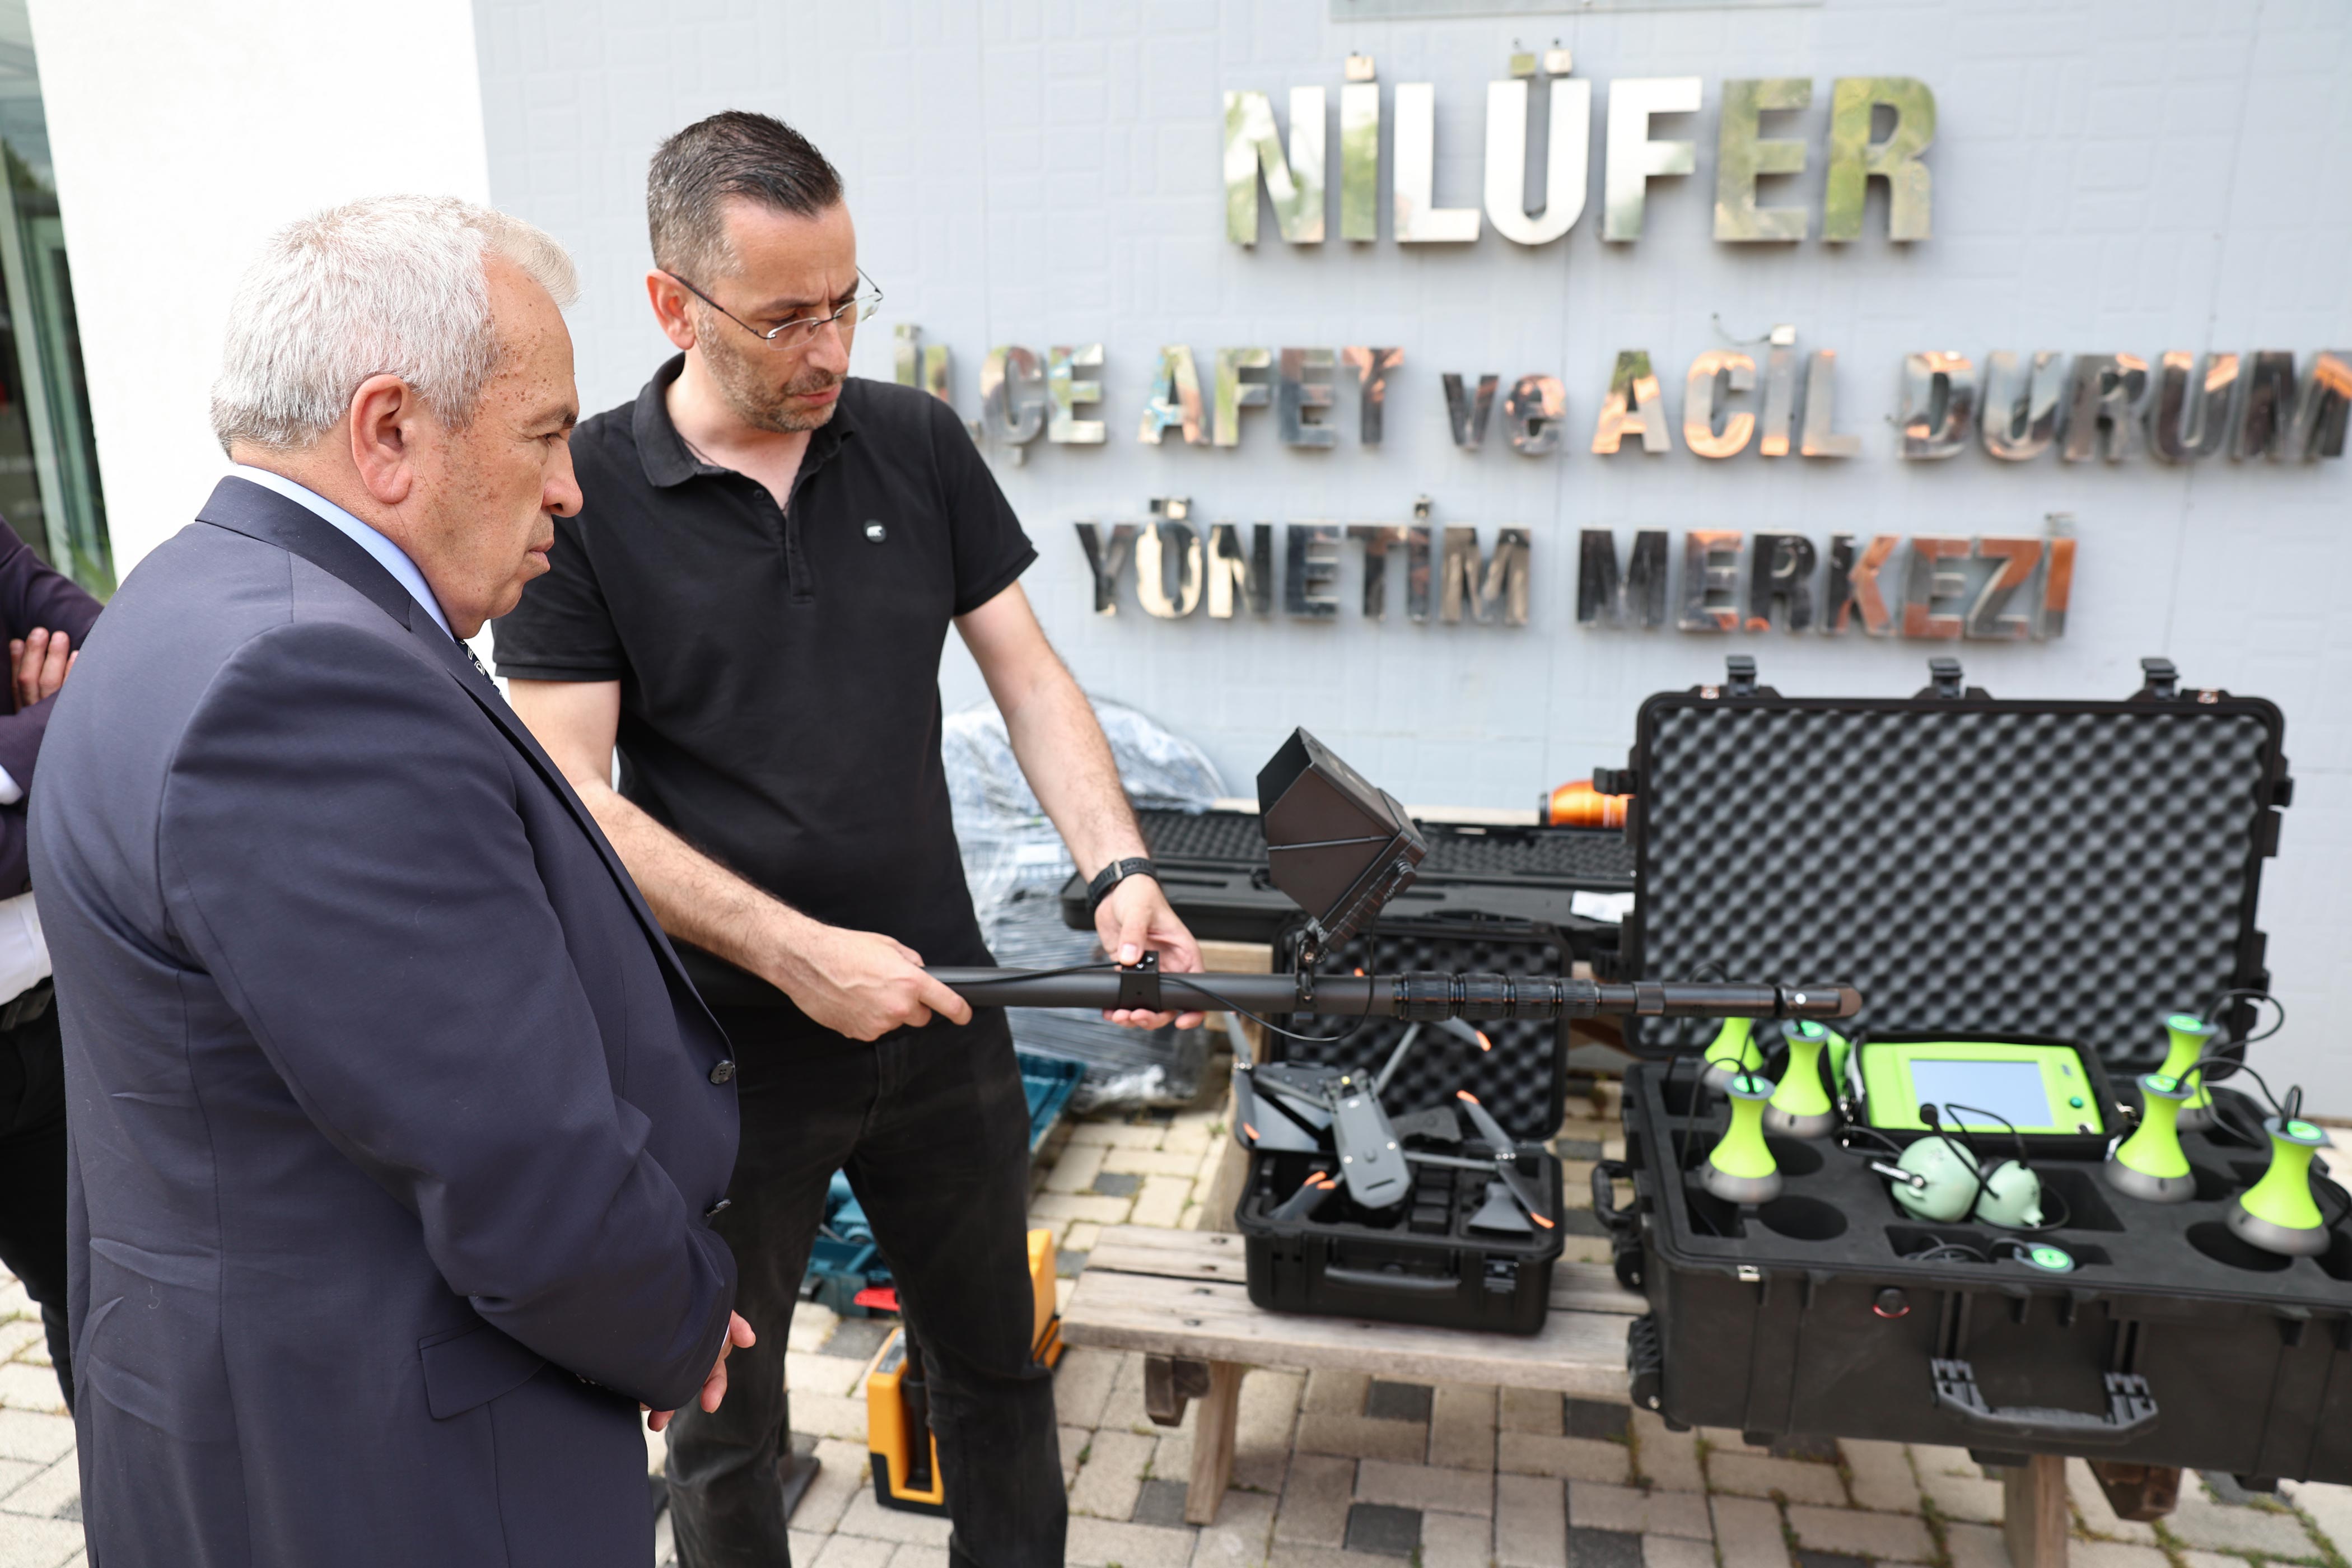 Nilüfer Afet Merkezi envanterine 22 adet son teknoloji malzeme ekledi